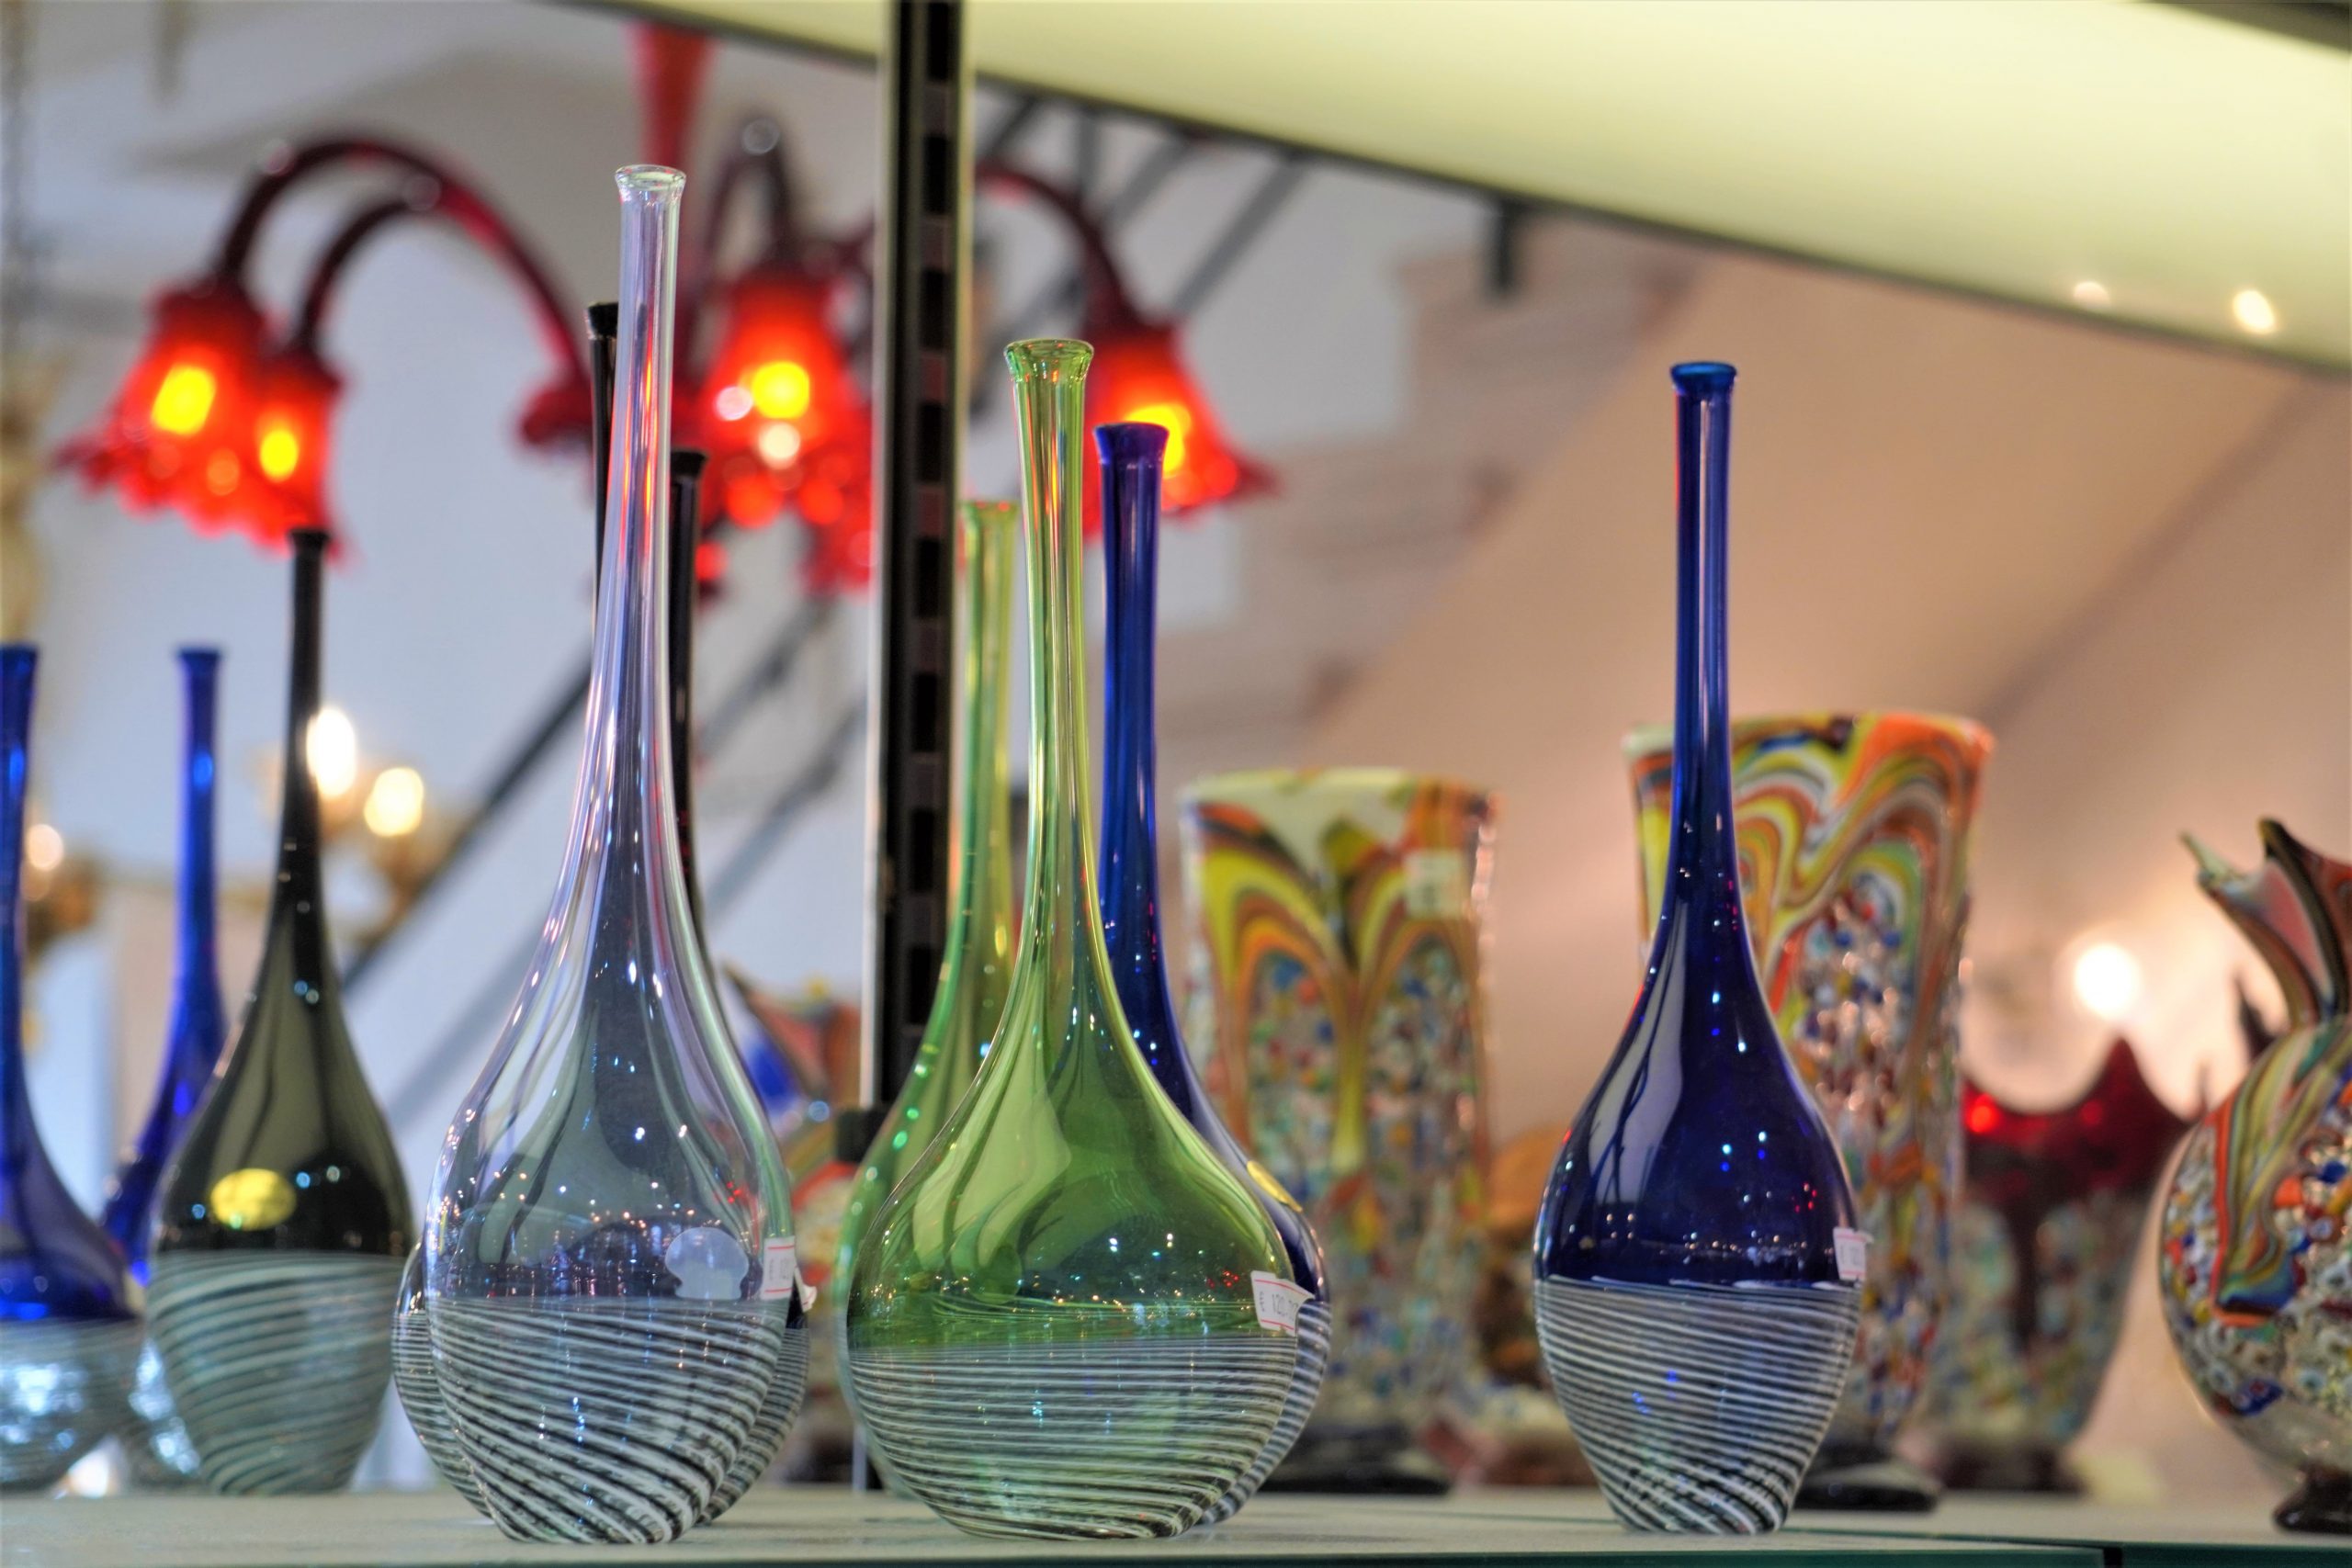 Murano glass from Venice Italy